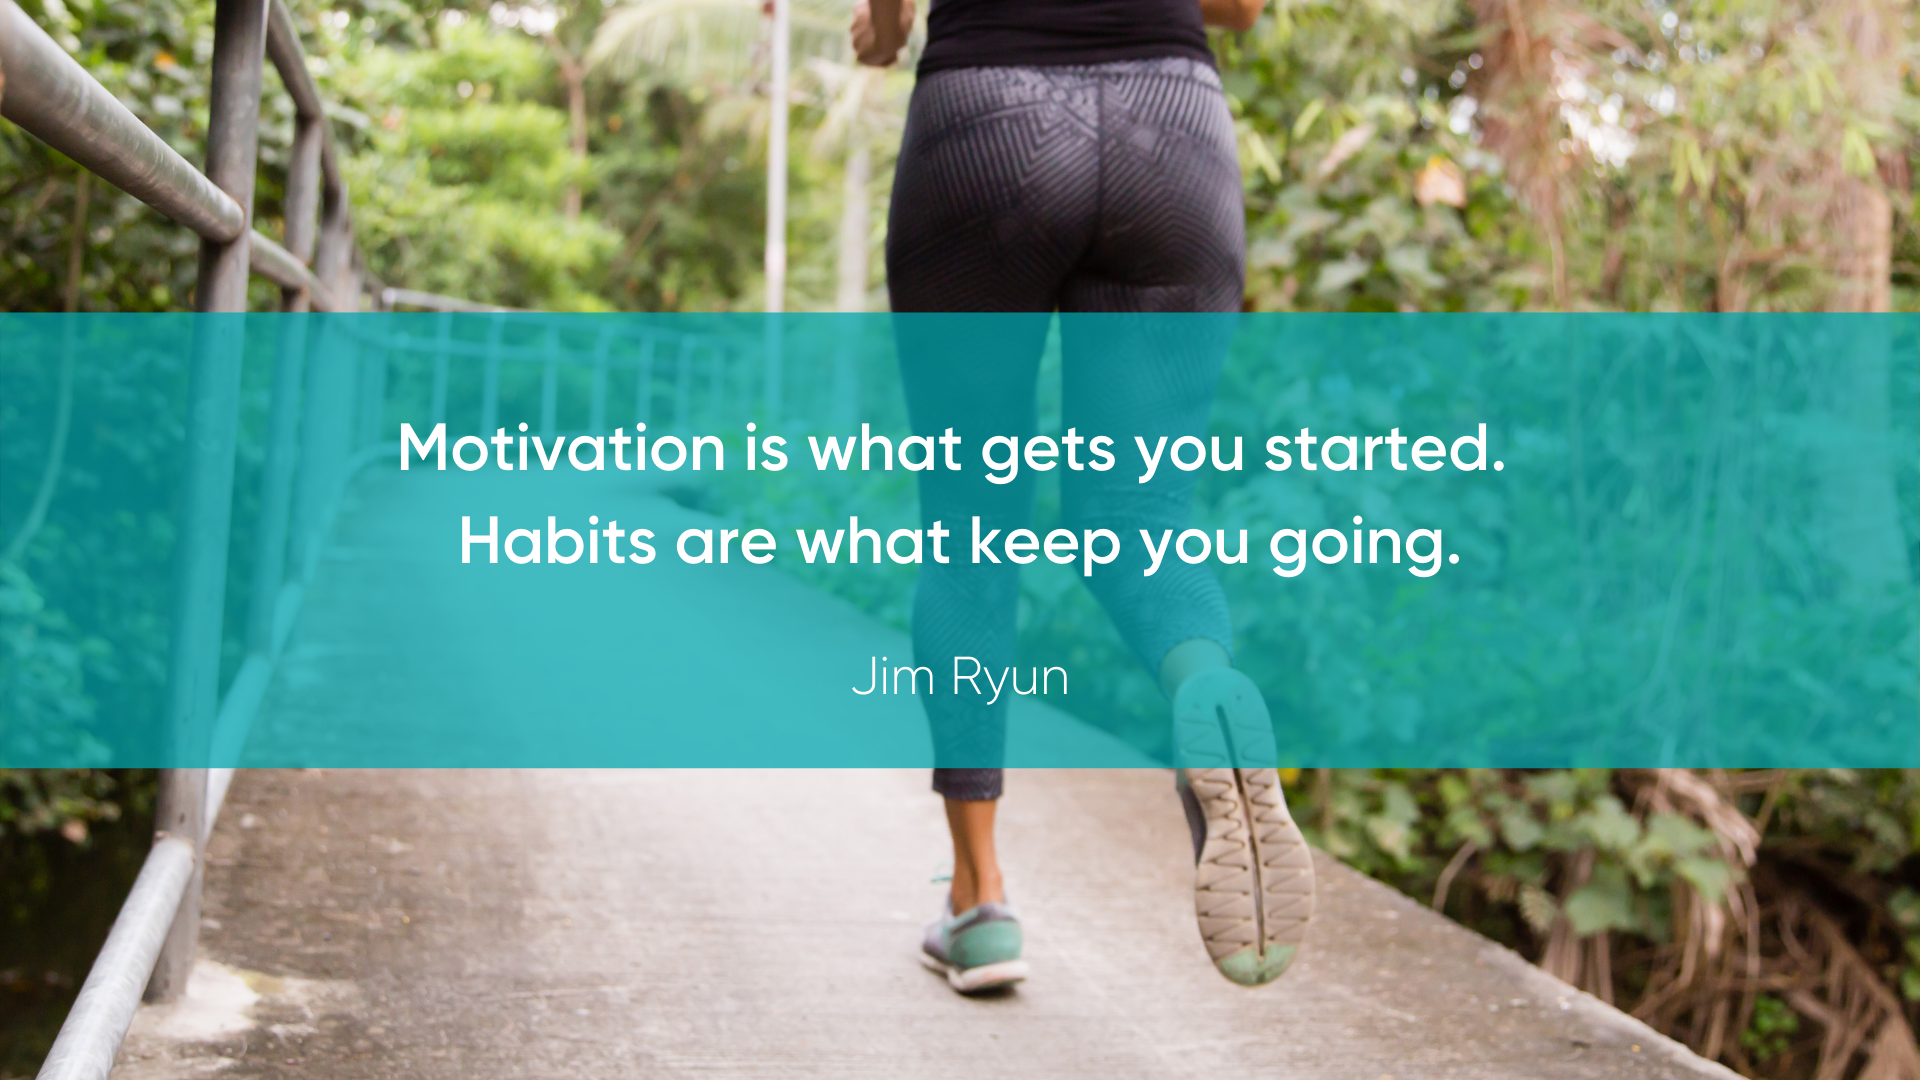 Jim Ryun Motivation Habits